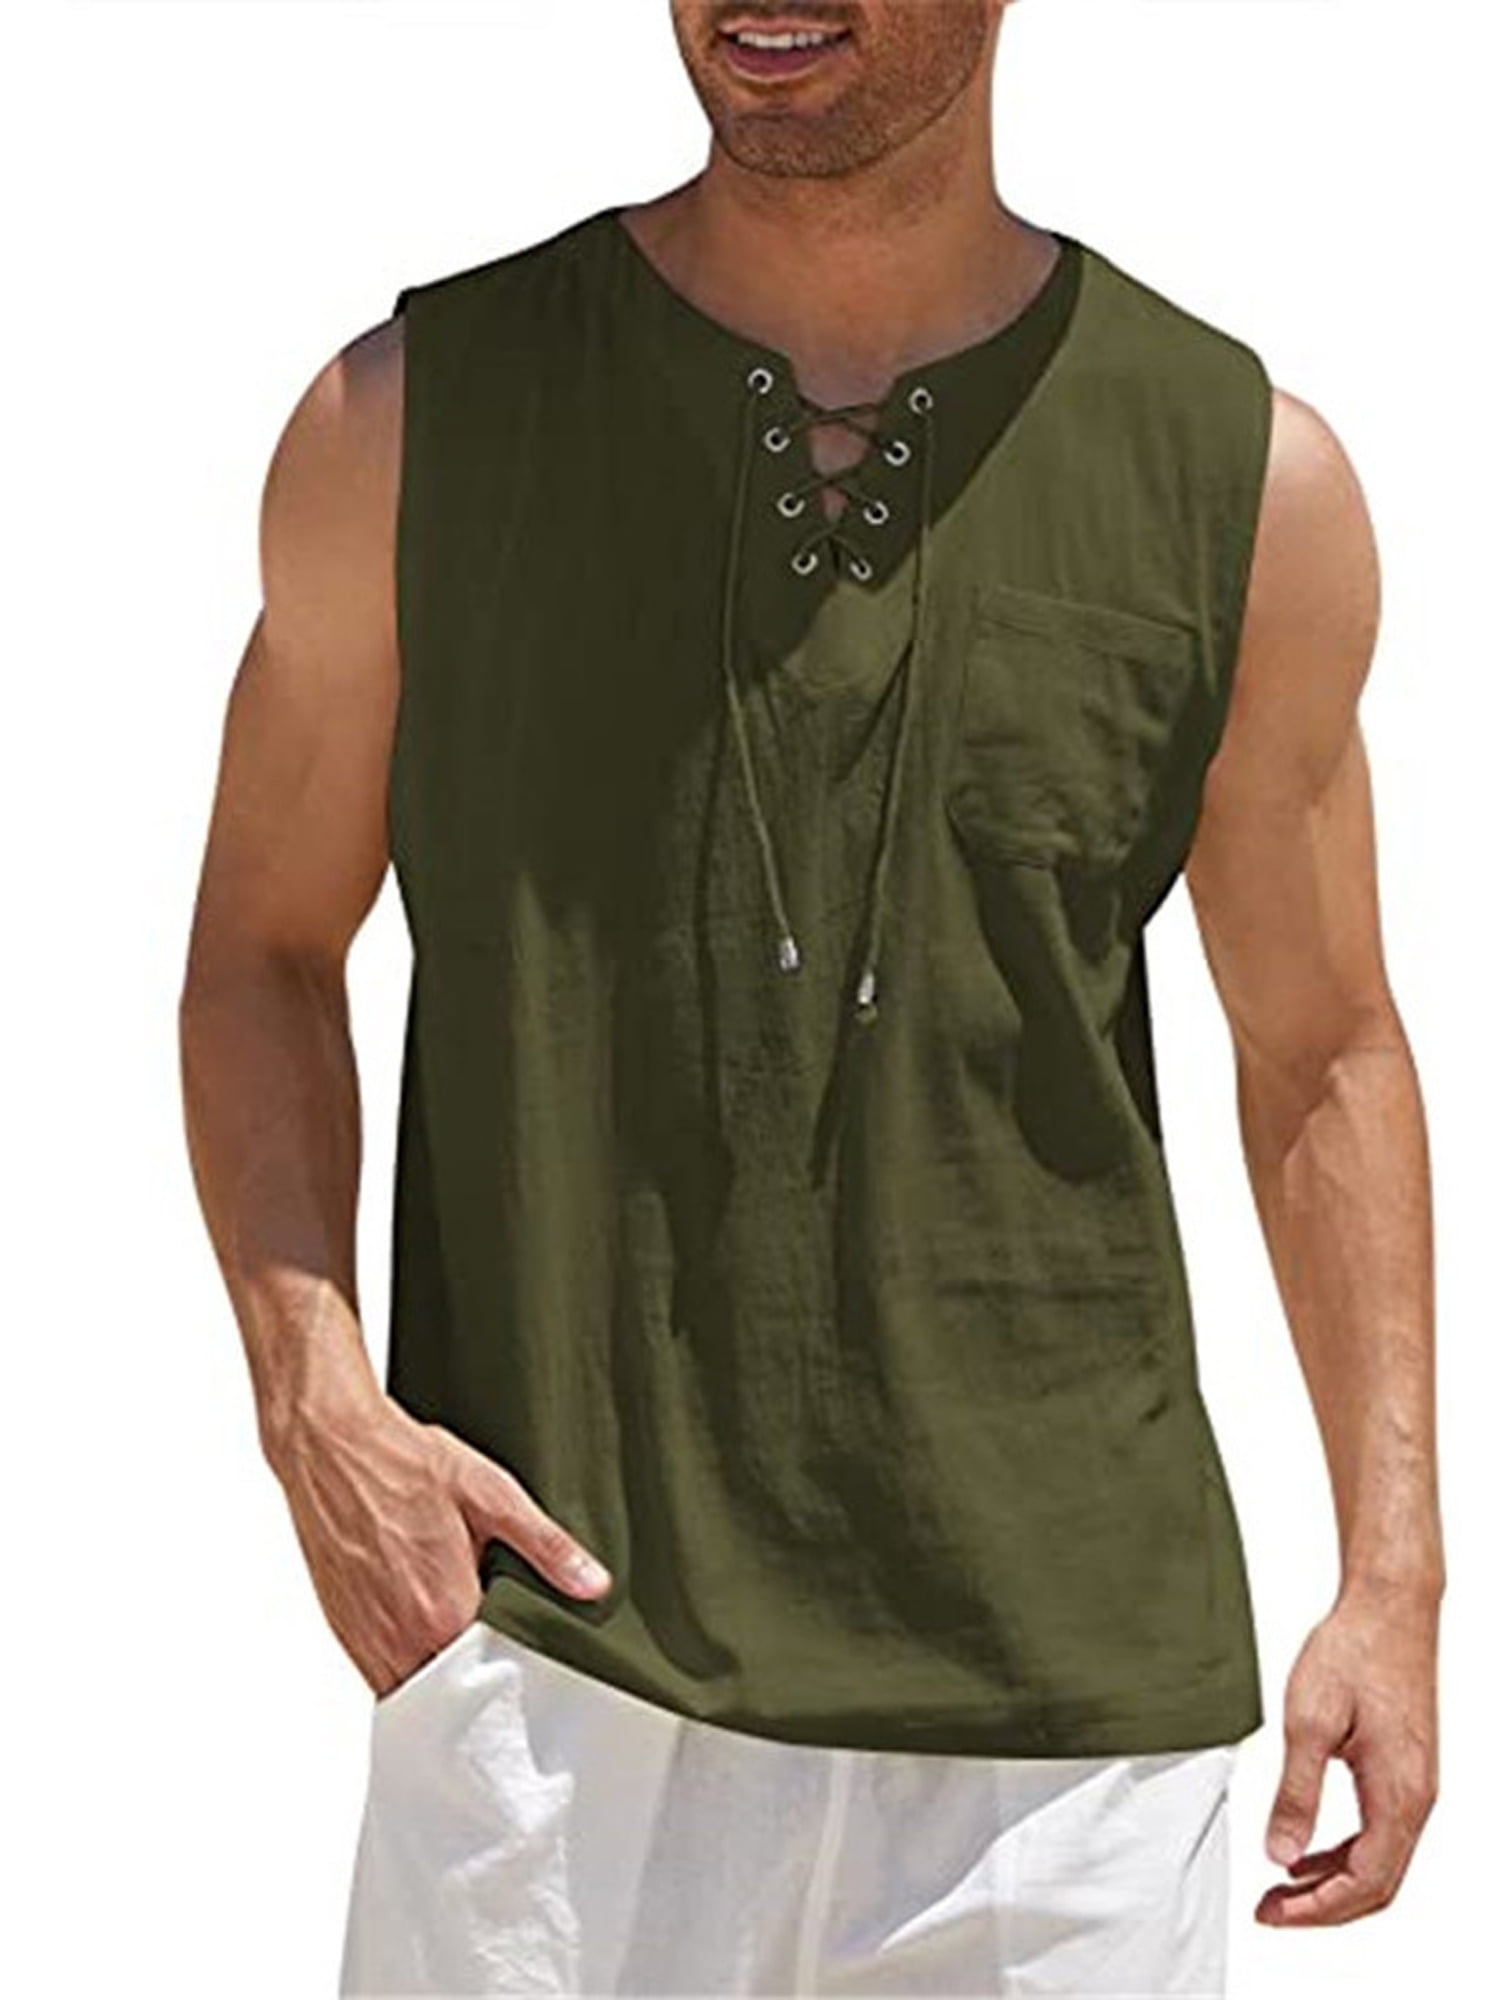 Genuiskids Men's Cotton Linen Tank Top Shirts Casual Sleeveless Lace Up ...